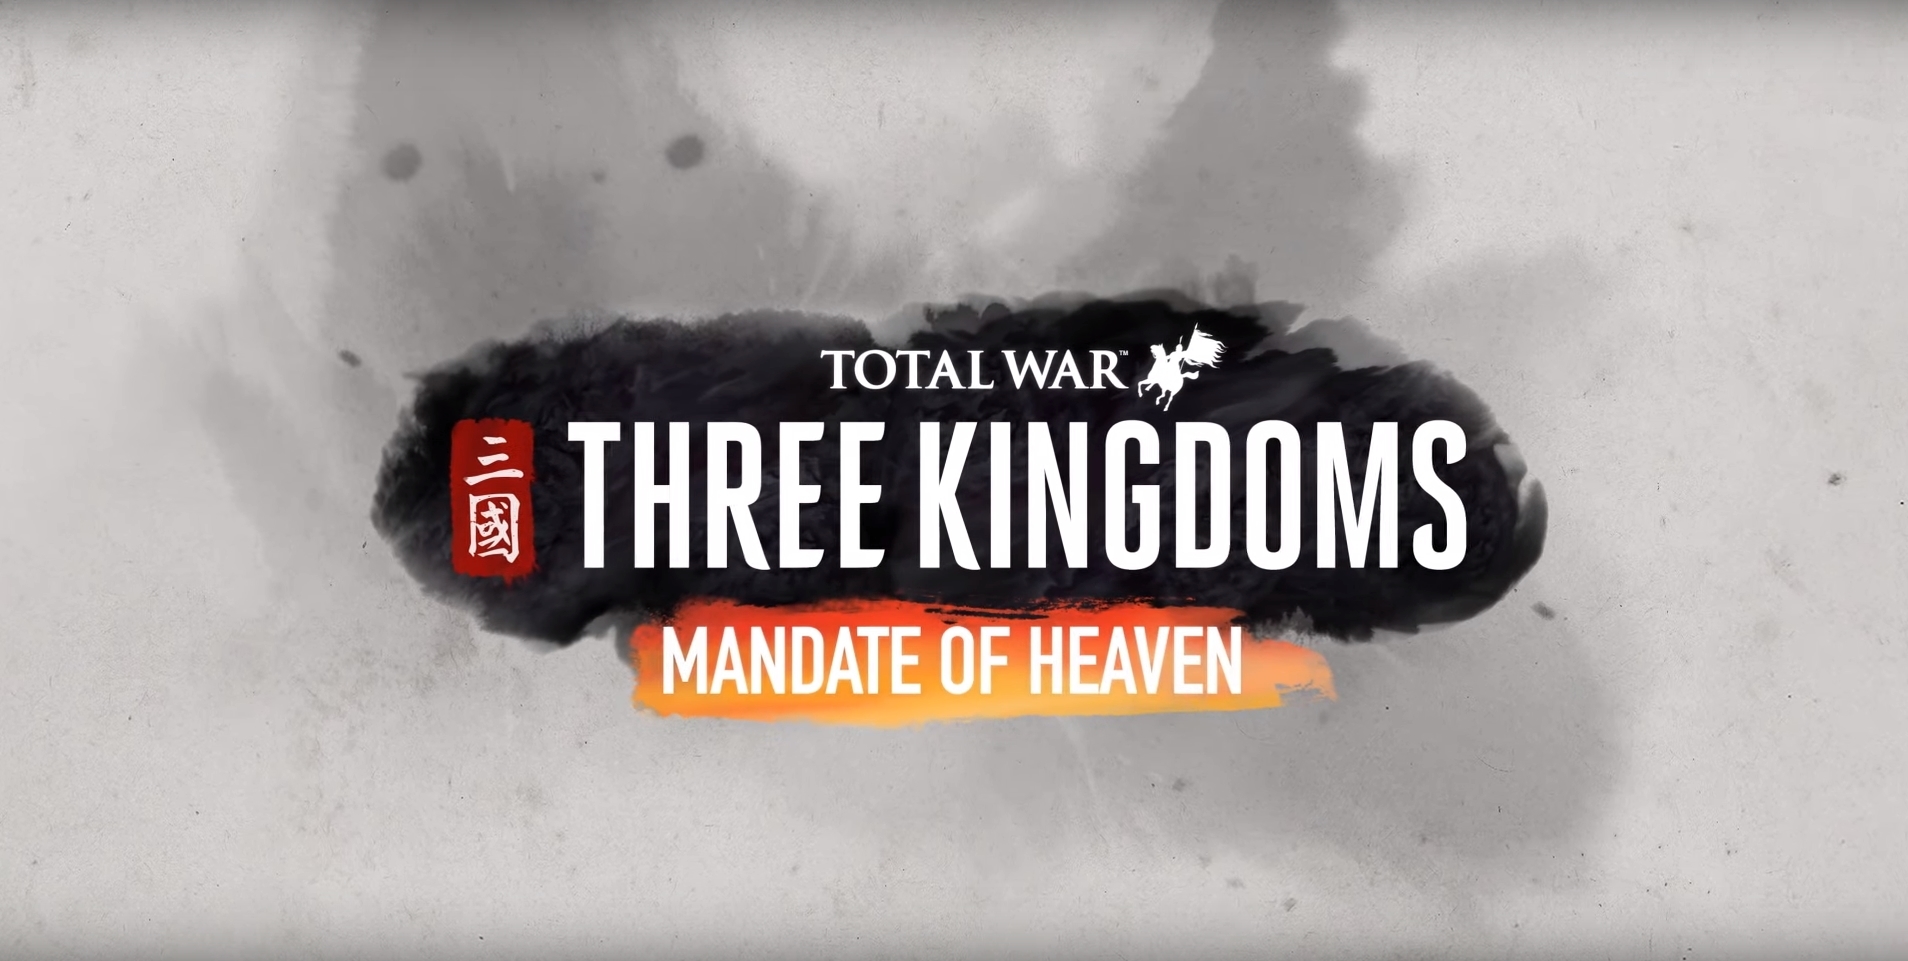 Upcoming Total War: Three Kingdoms DLC, Mandate of Heaven, Set to be a Prequel